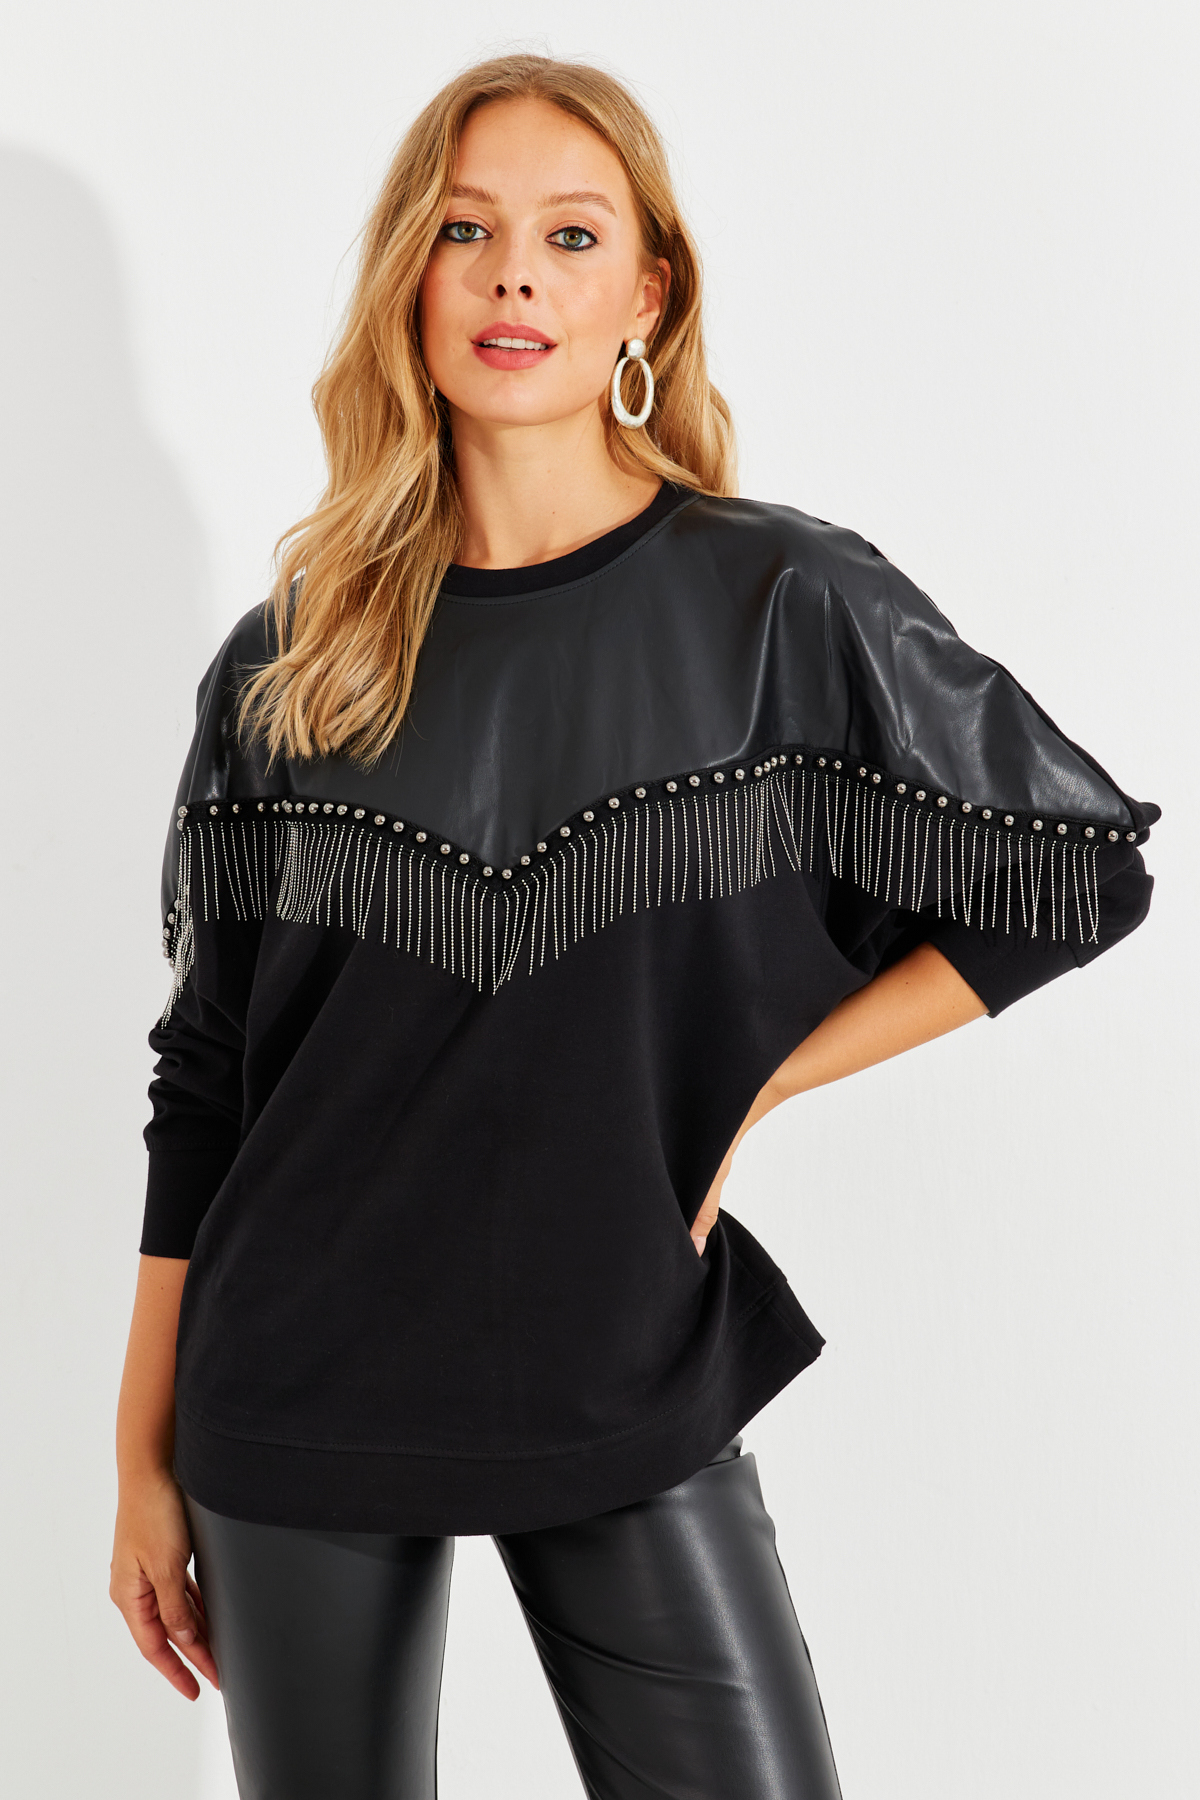 Cool & Sexy Women's Black Faux Leather Block Sweatshirt